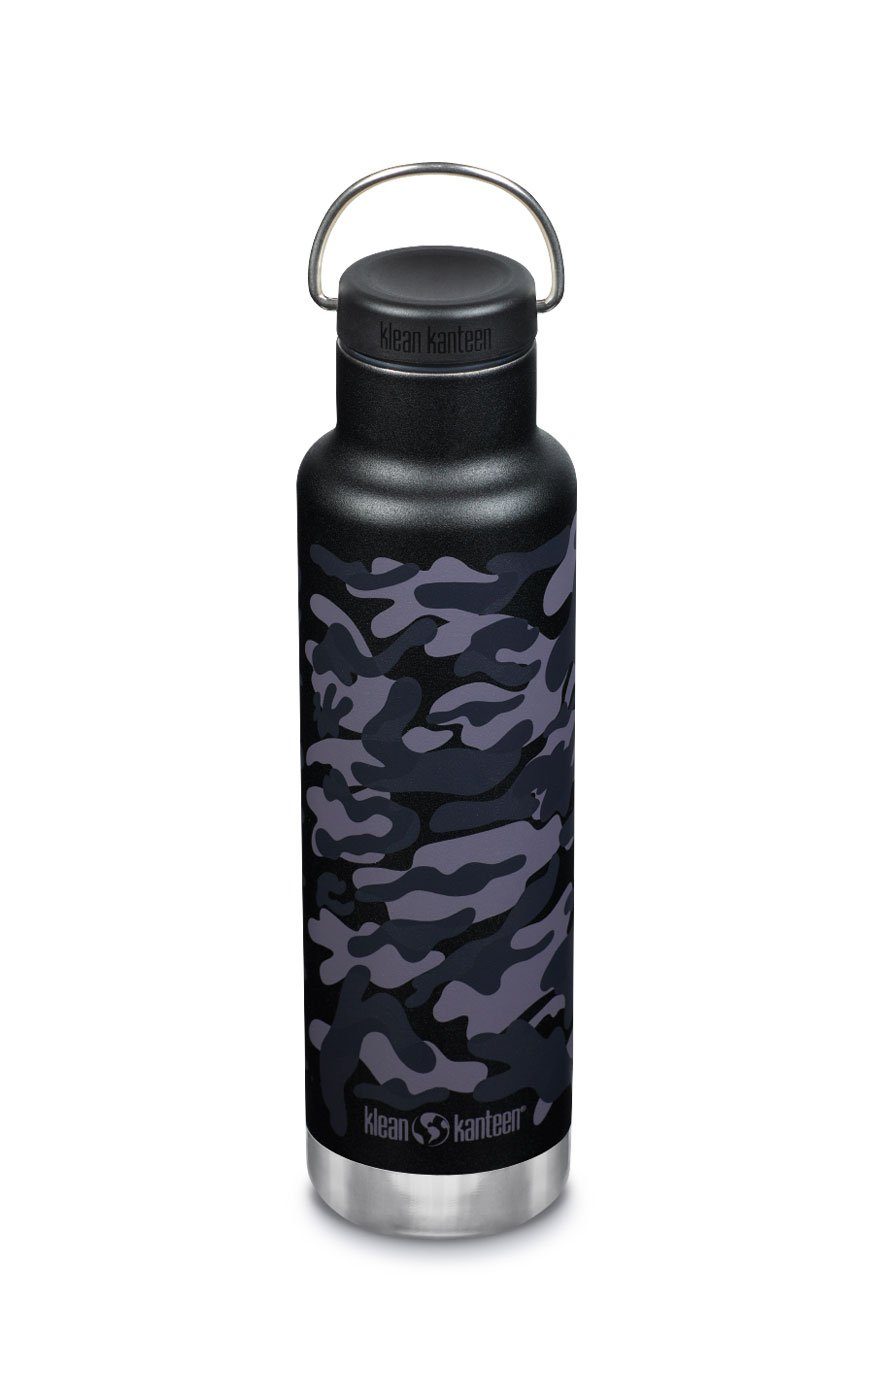 Camo Black Cap Isolierflasche Kanteen Klean vakuumisoliert, Classic Loop mit 592ml